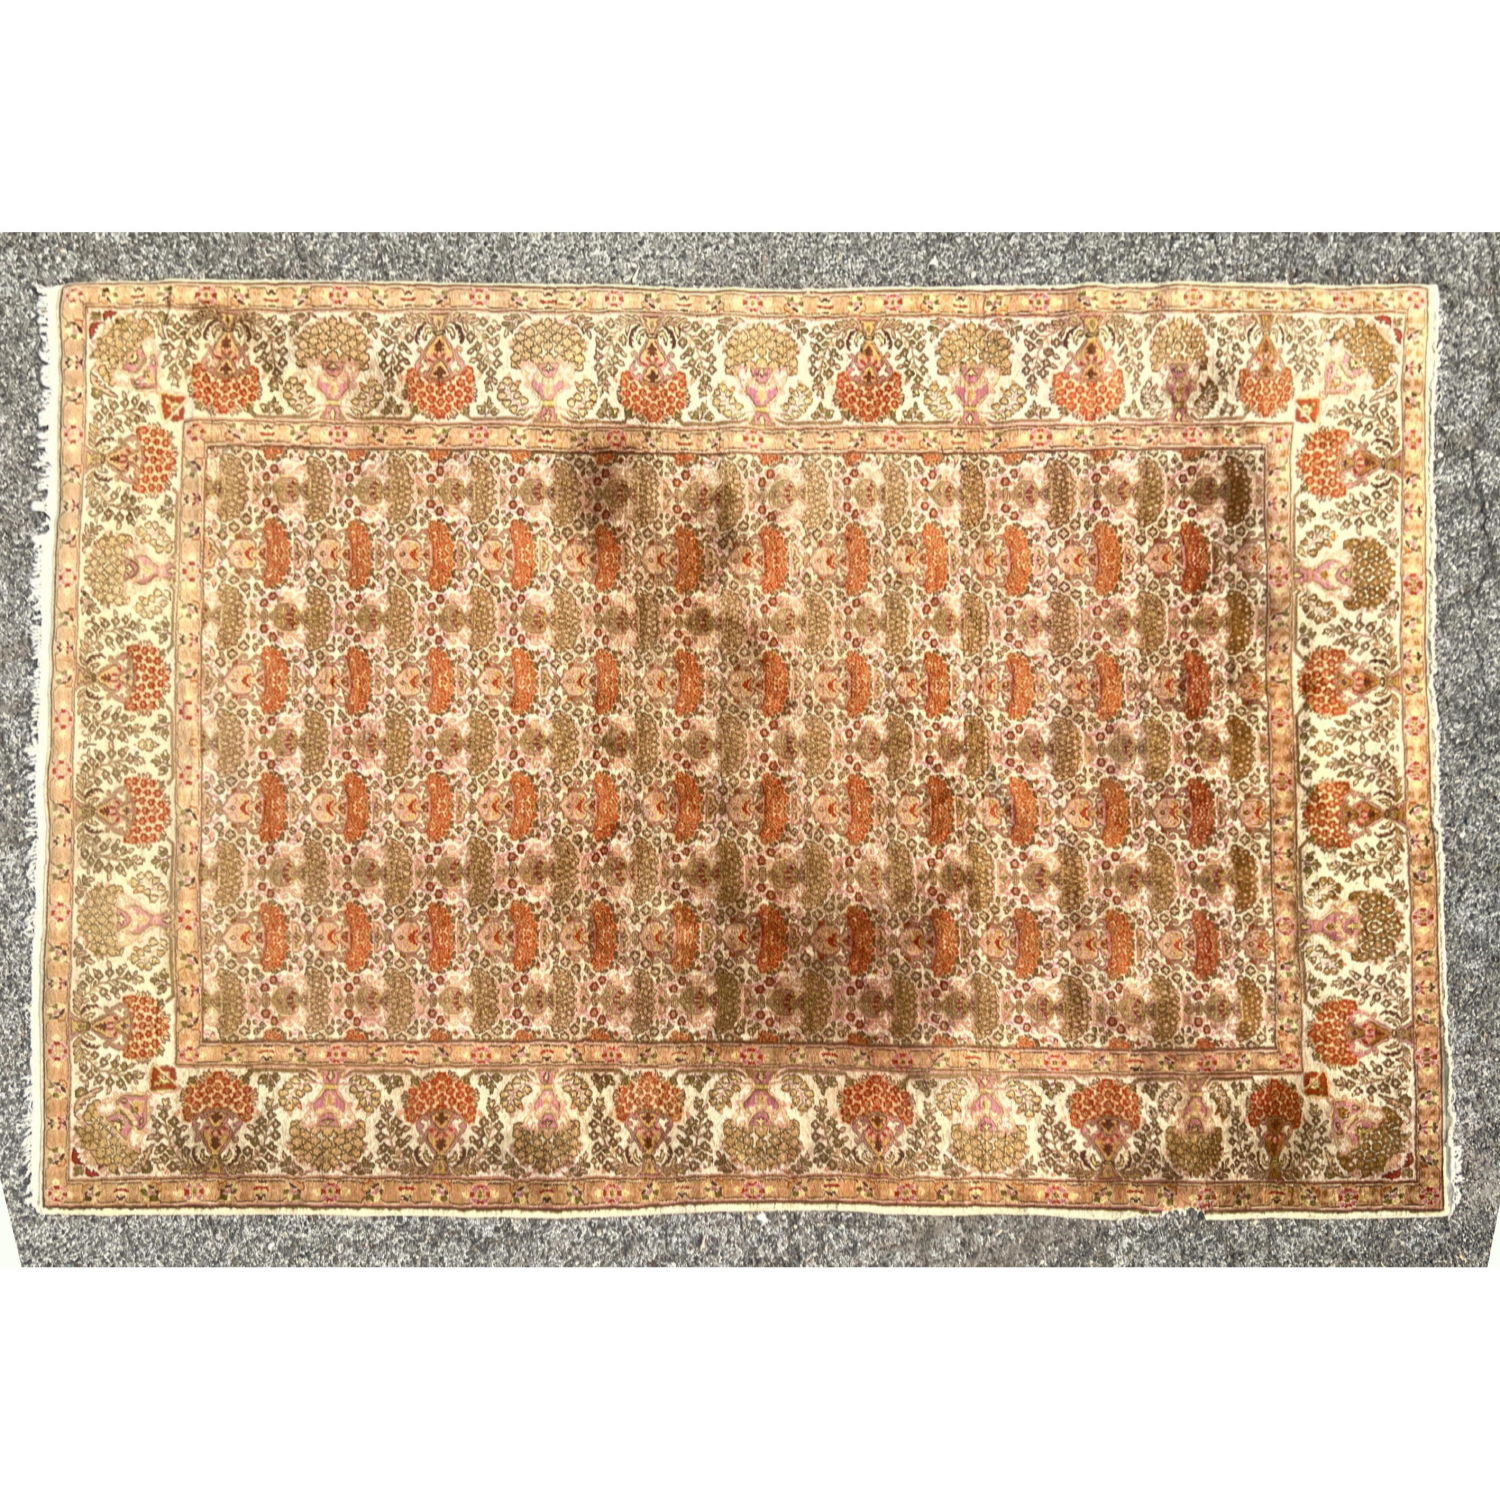 9'7 x 6' Handmade Carpet Rug. Tan